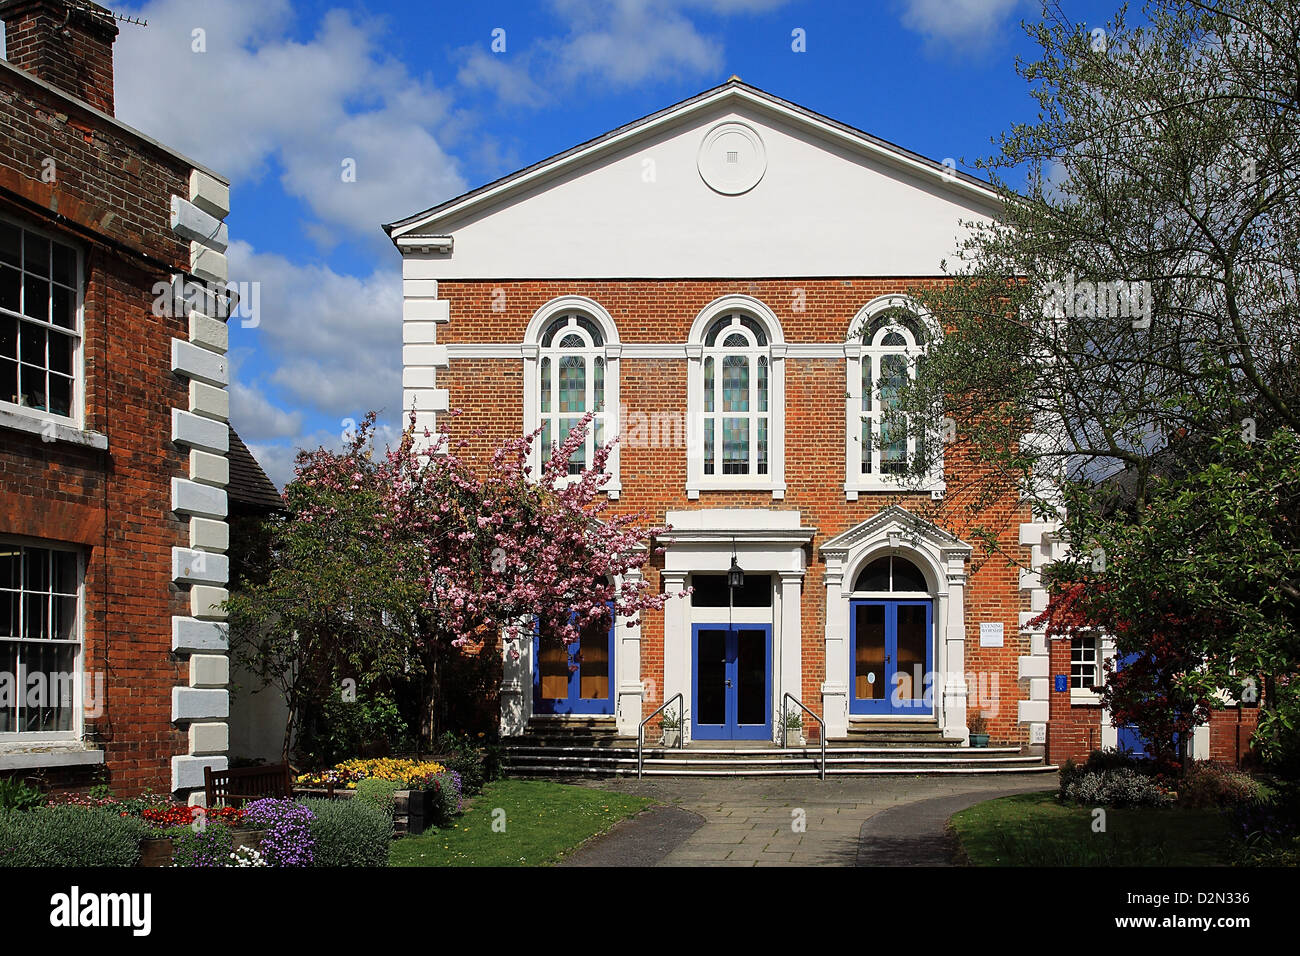 United Reformed Church, West Street, Dorking, surrey, England Stock Photo